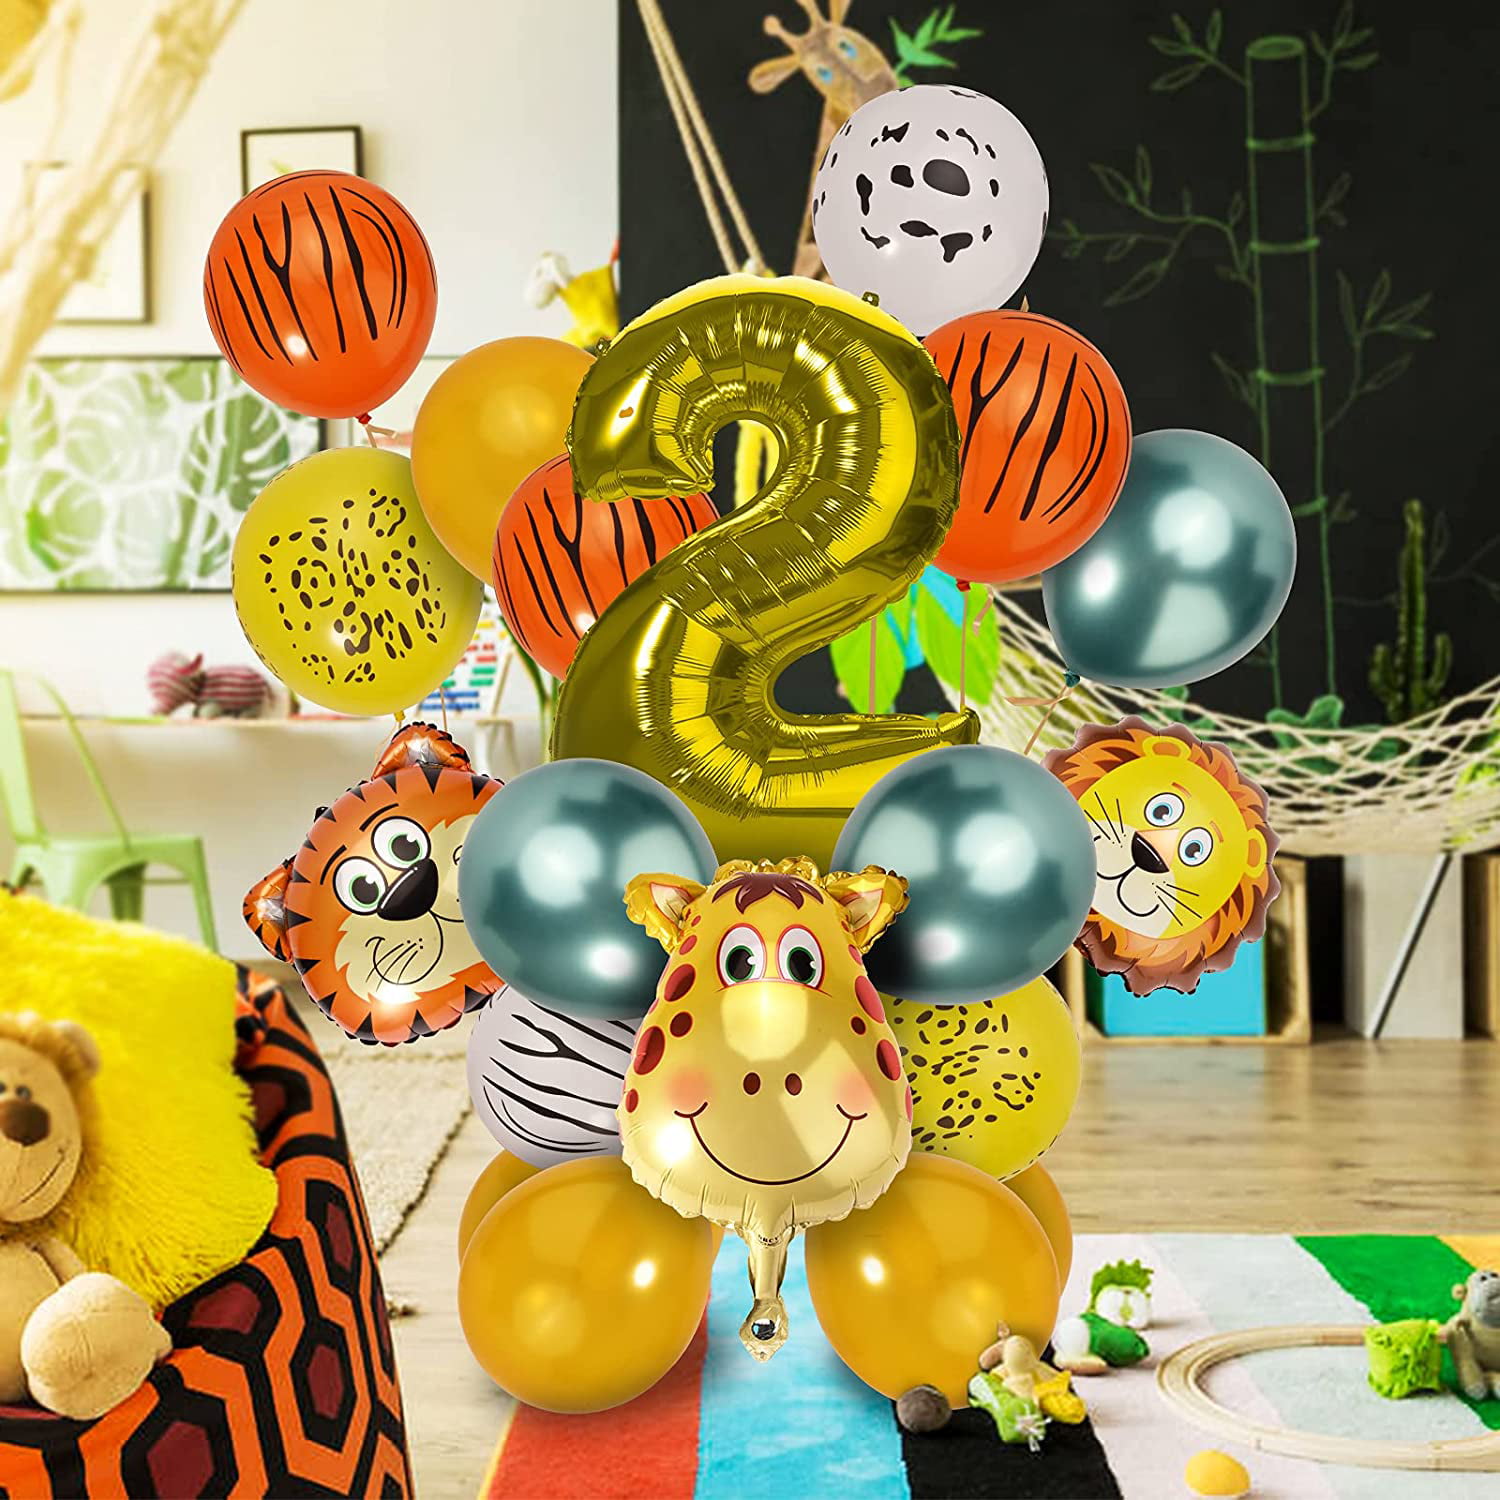 3st Safari Theme Birthday Hicfen 21 Pcs Jungle Animal Theme Kids Birthday Party Supplies Safari Birthday Number Balloons Decorations Perfect for Your Kids Theme Party 